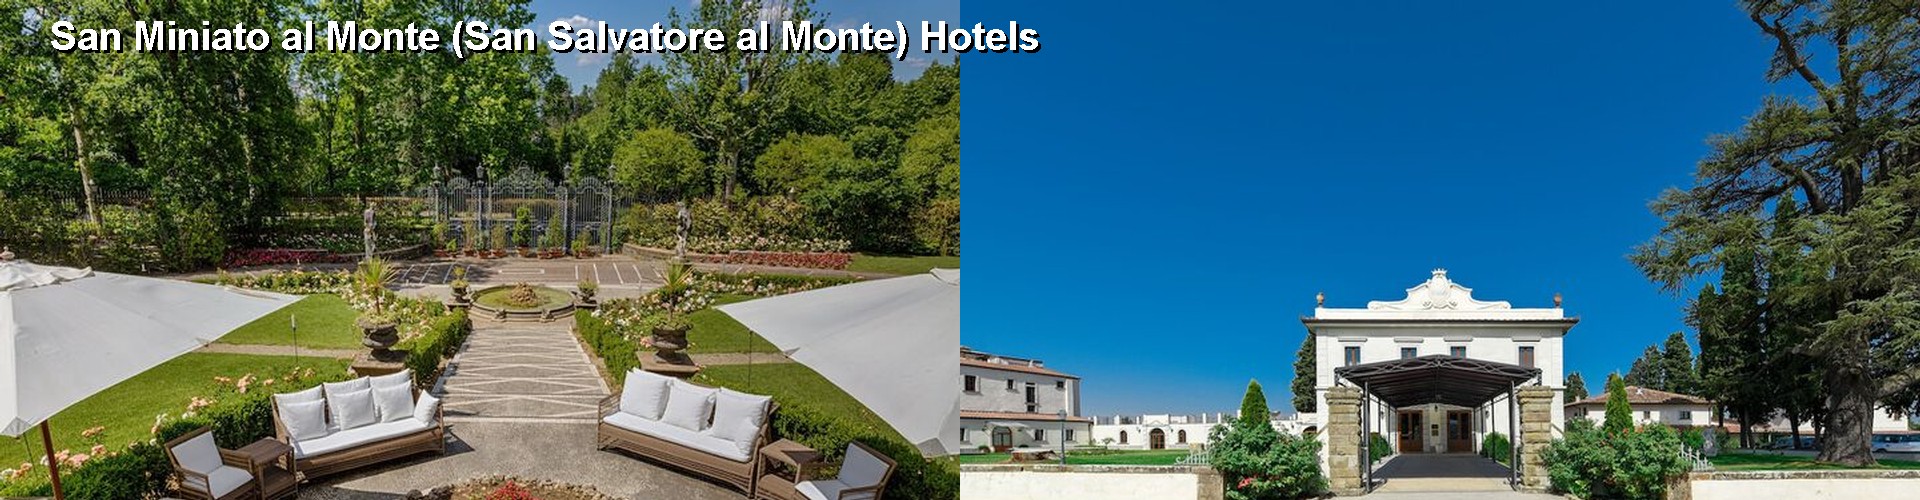 5 Best Hotels near San Miniato al Monte (San Salvatore al Monte)